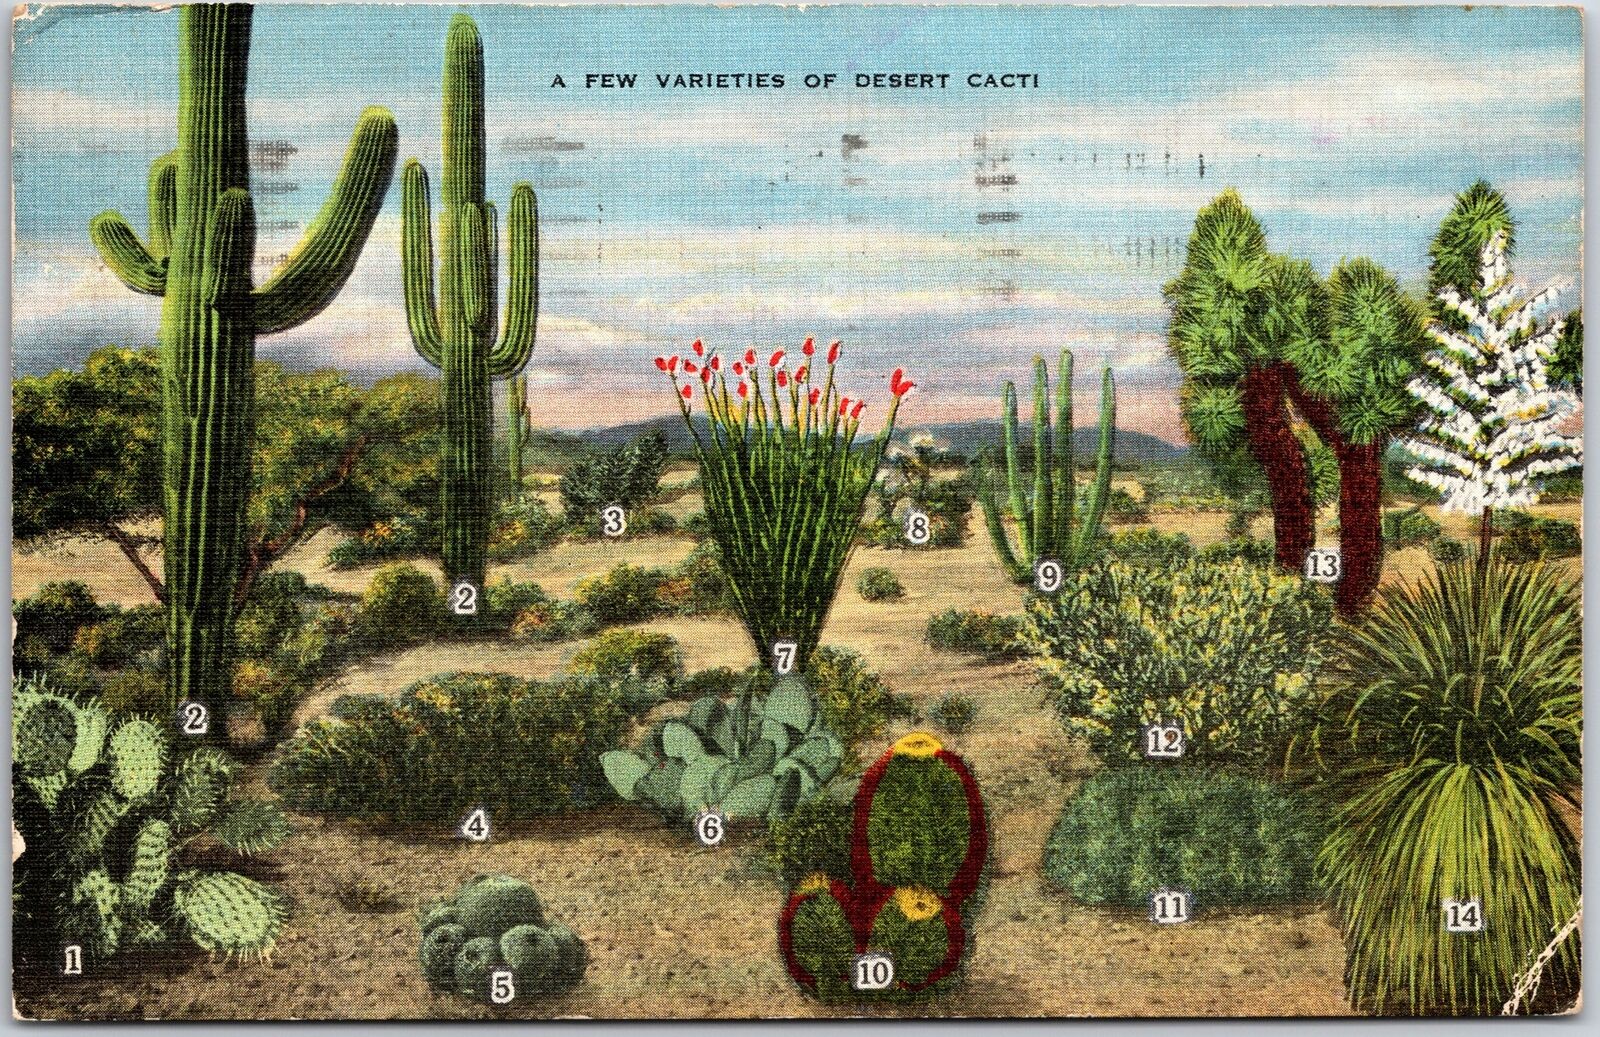 1949 A Few Varieties Of Desert Cacti 14 Species Posted Postcard